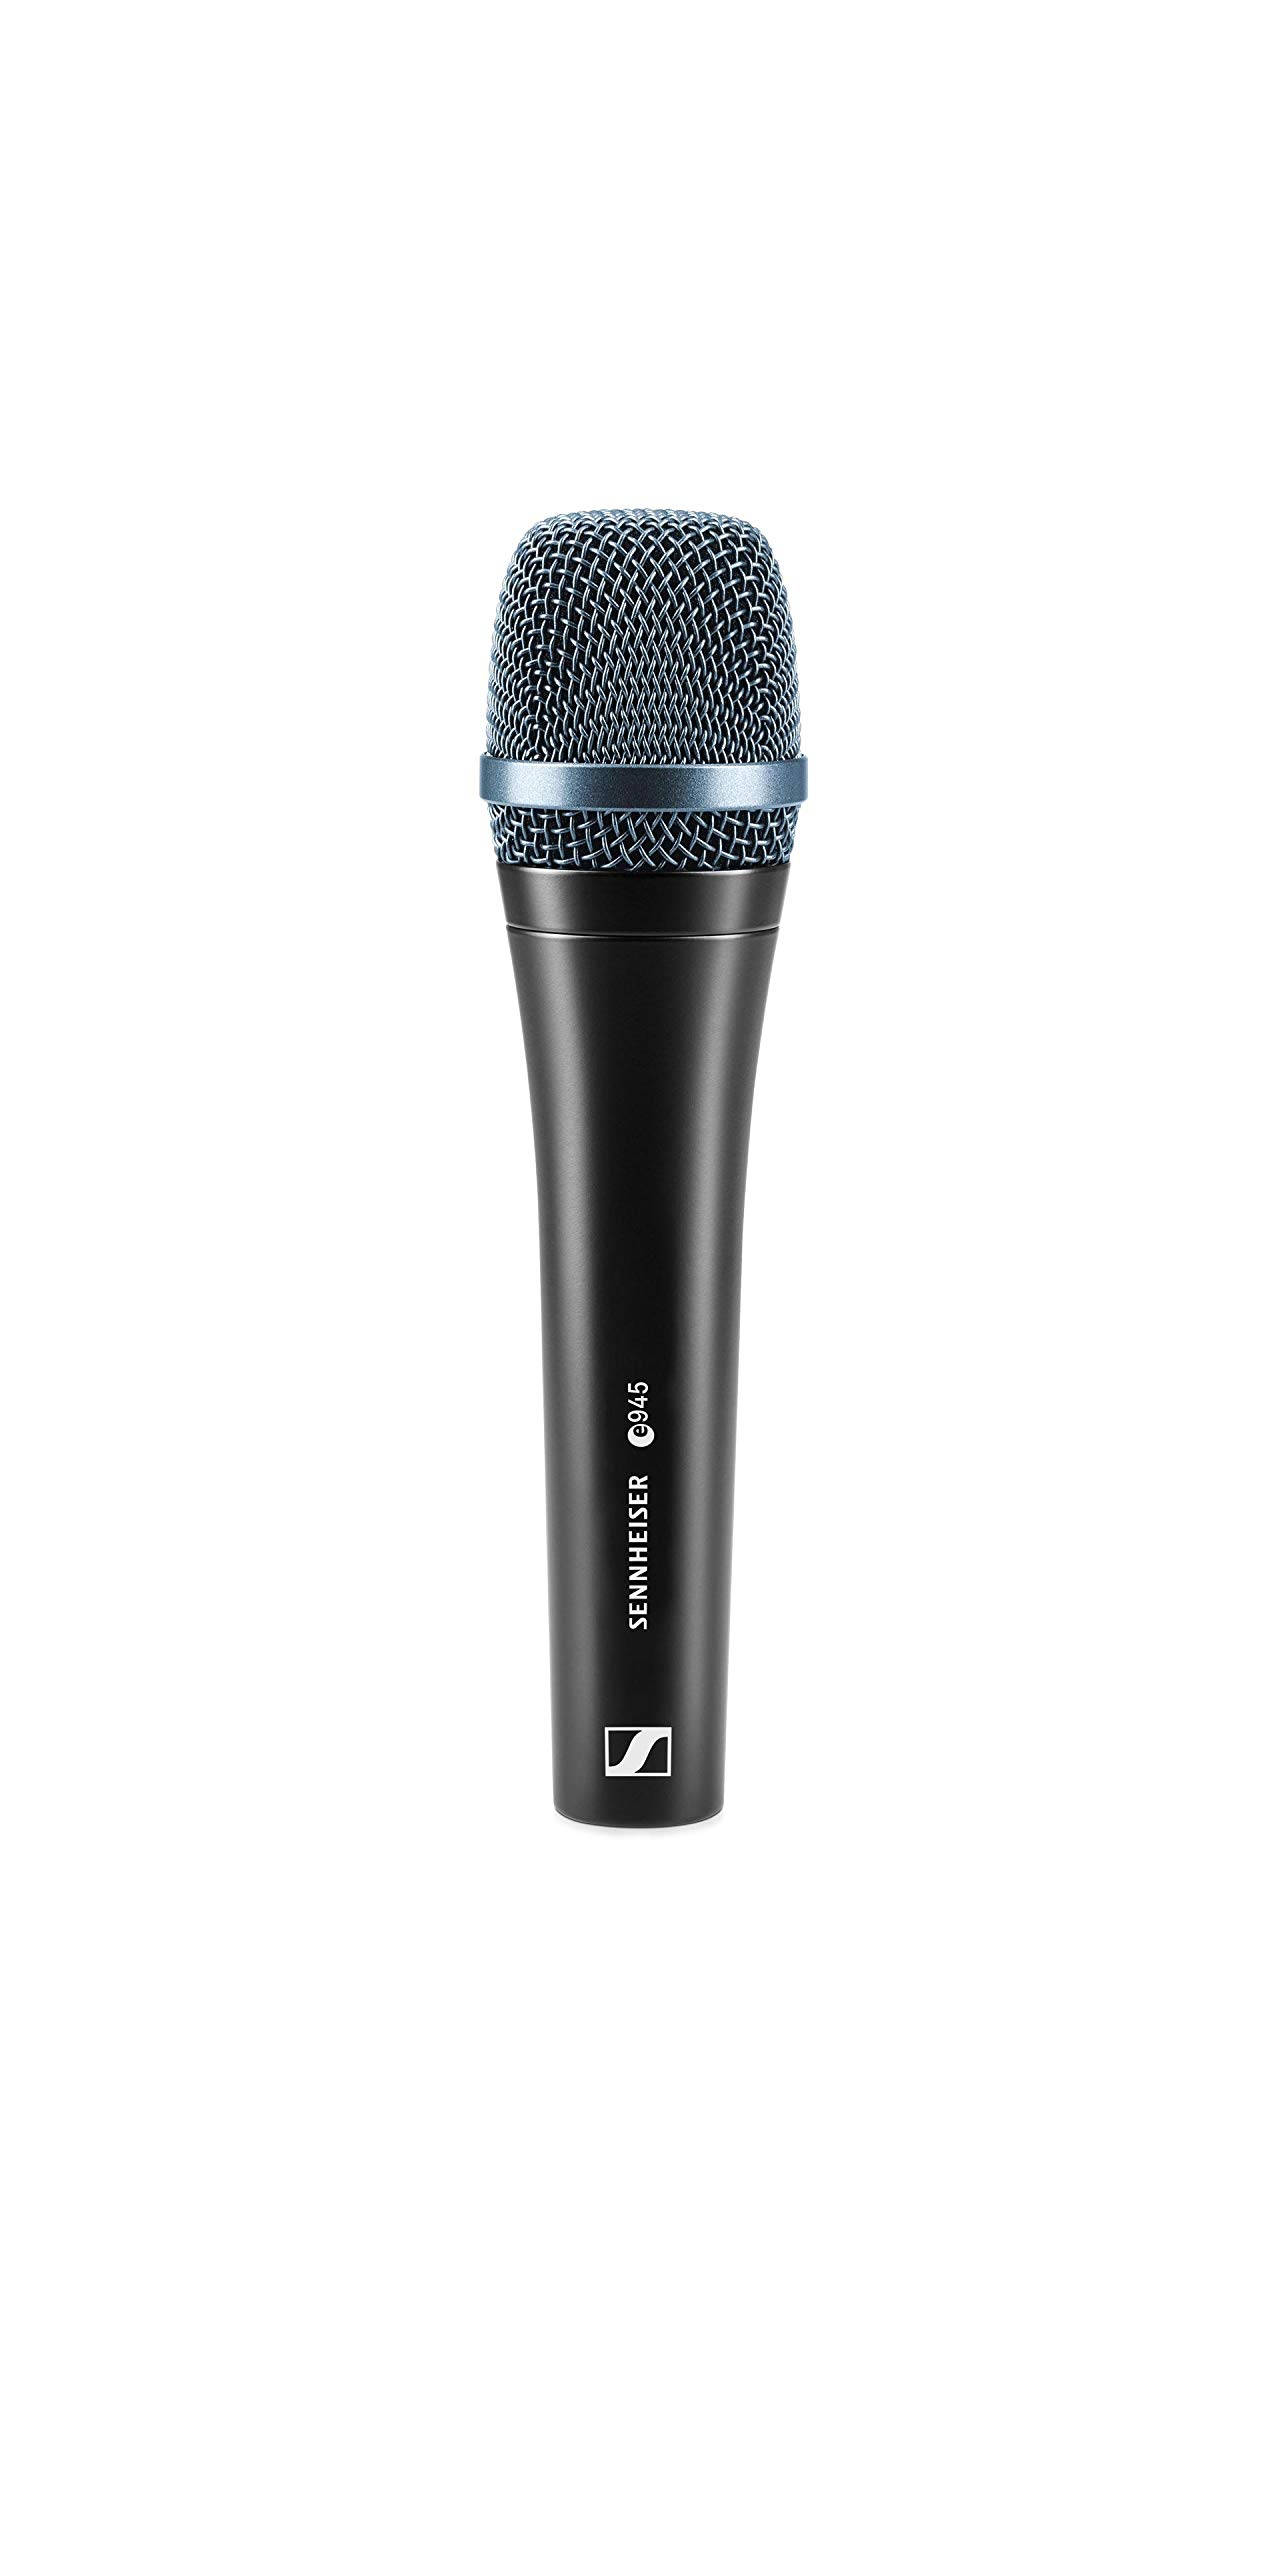 Sennheiser Pro Audio Professional E 945 Dynamic Super-Cardioid Vocal Microphone